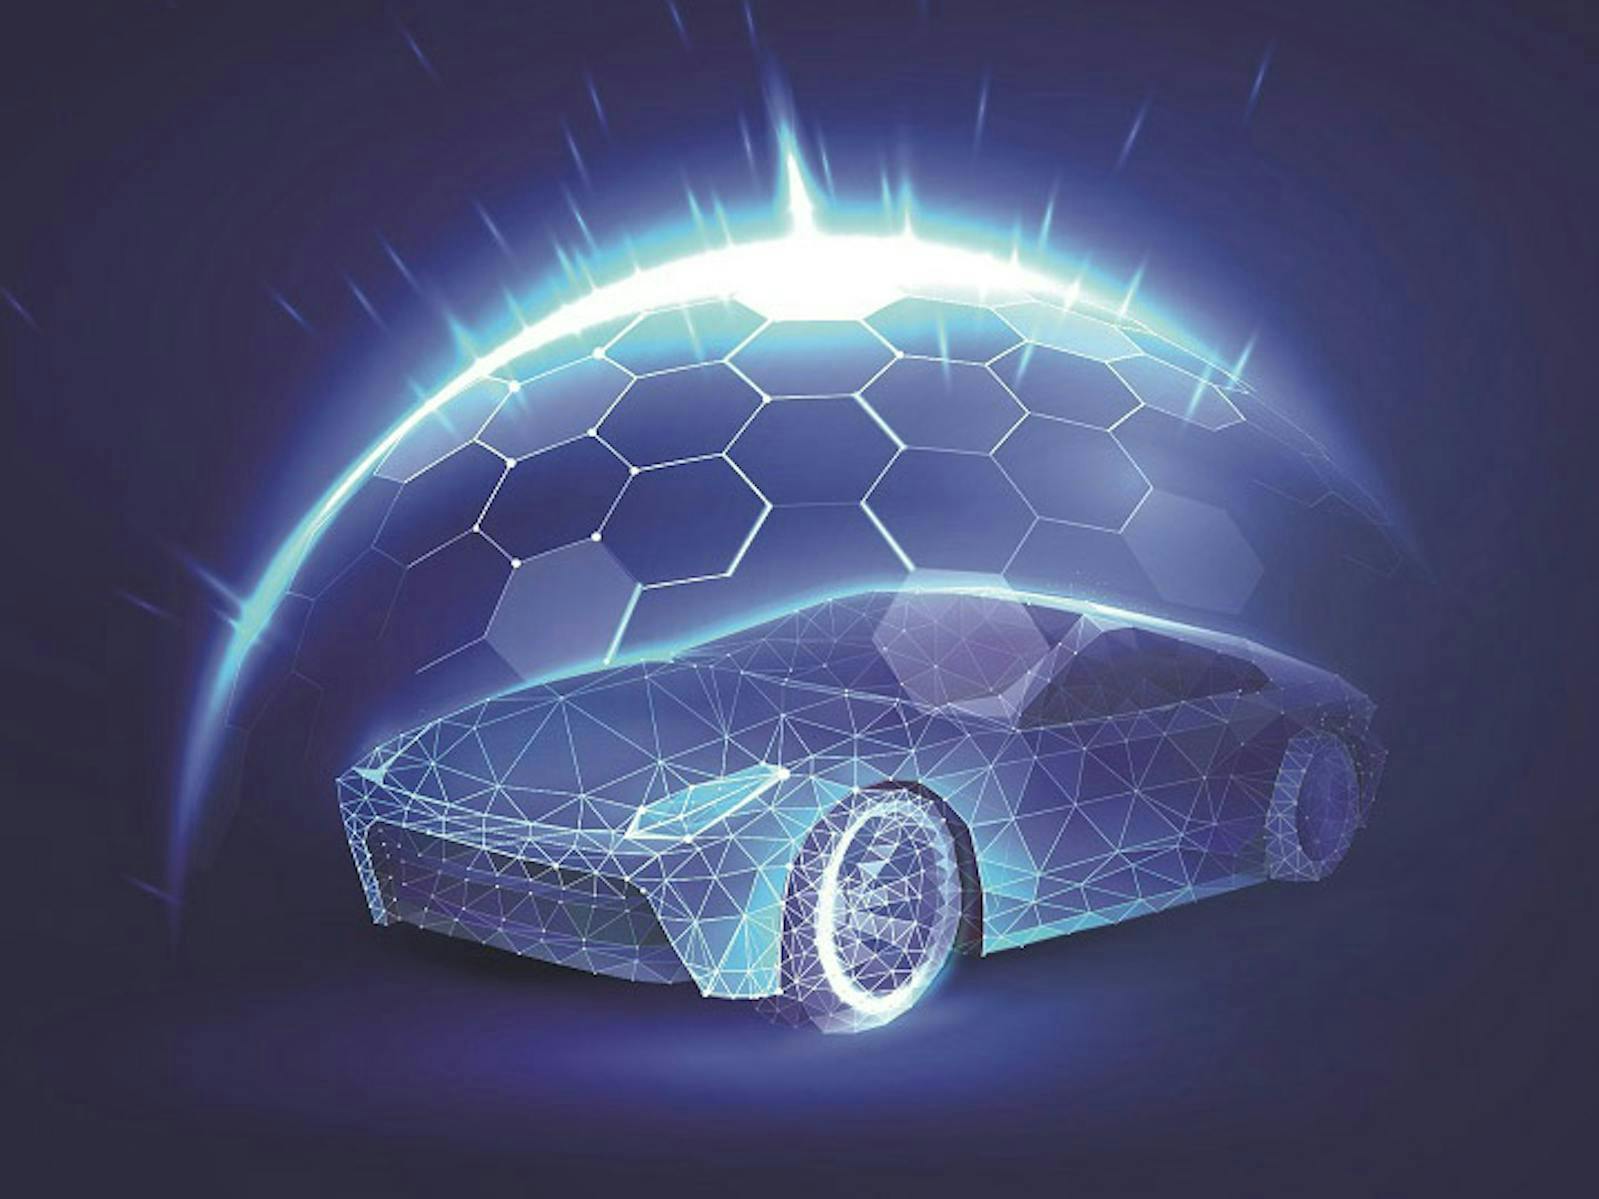 an image of a digitally shielded electric car. Credit: O-IAHI via Shutterstock.